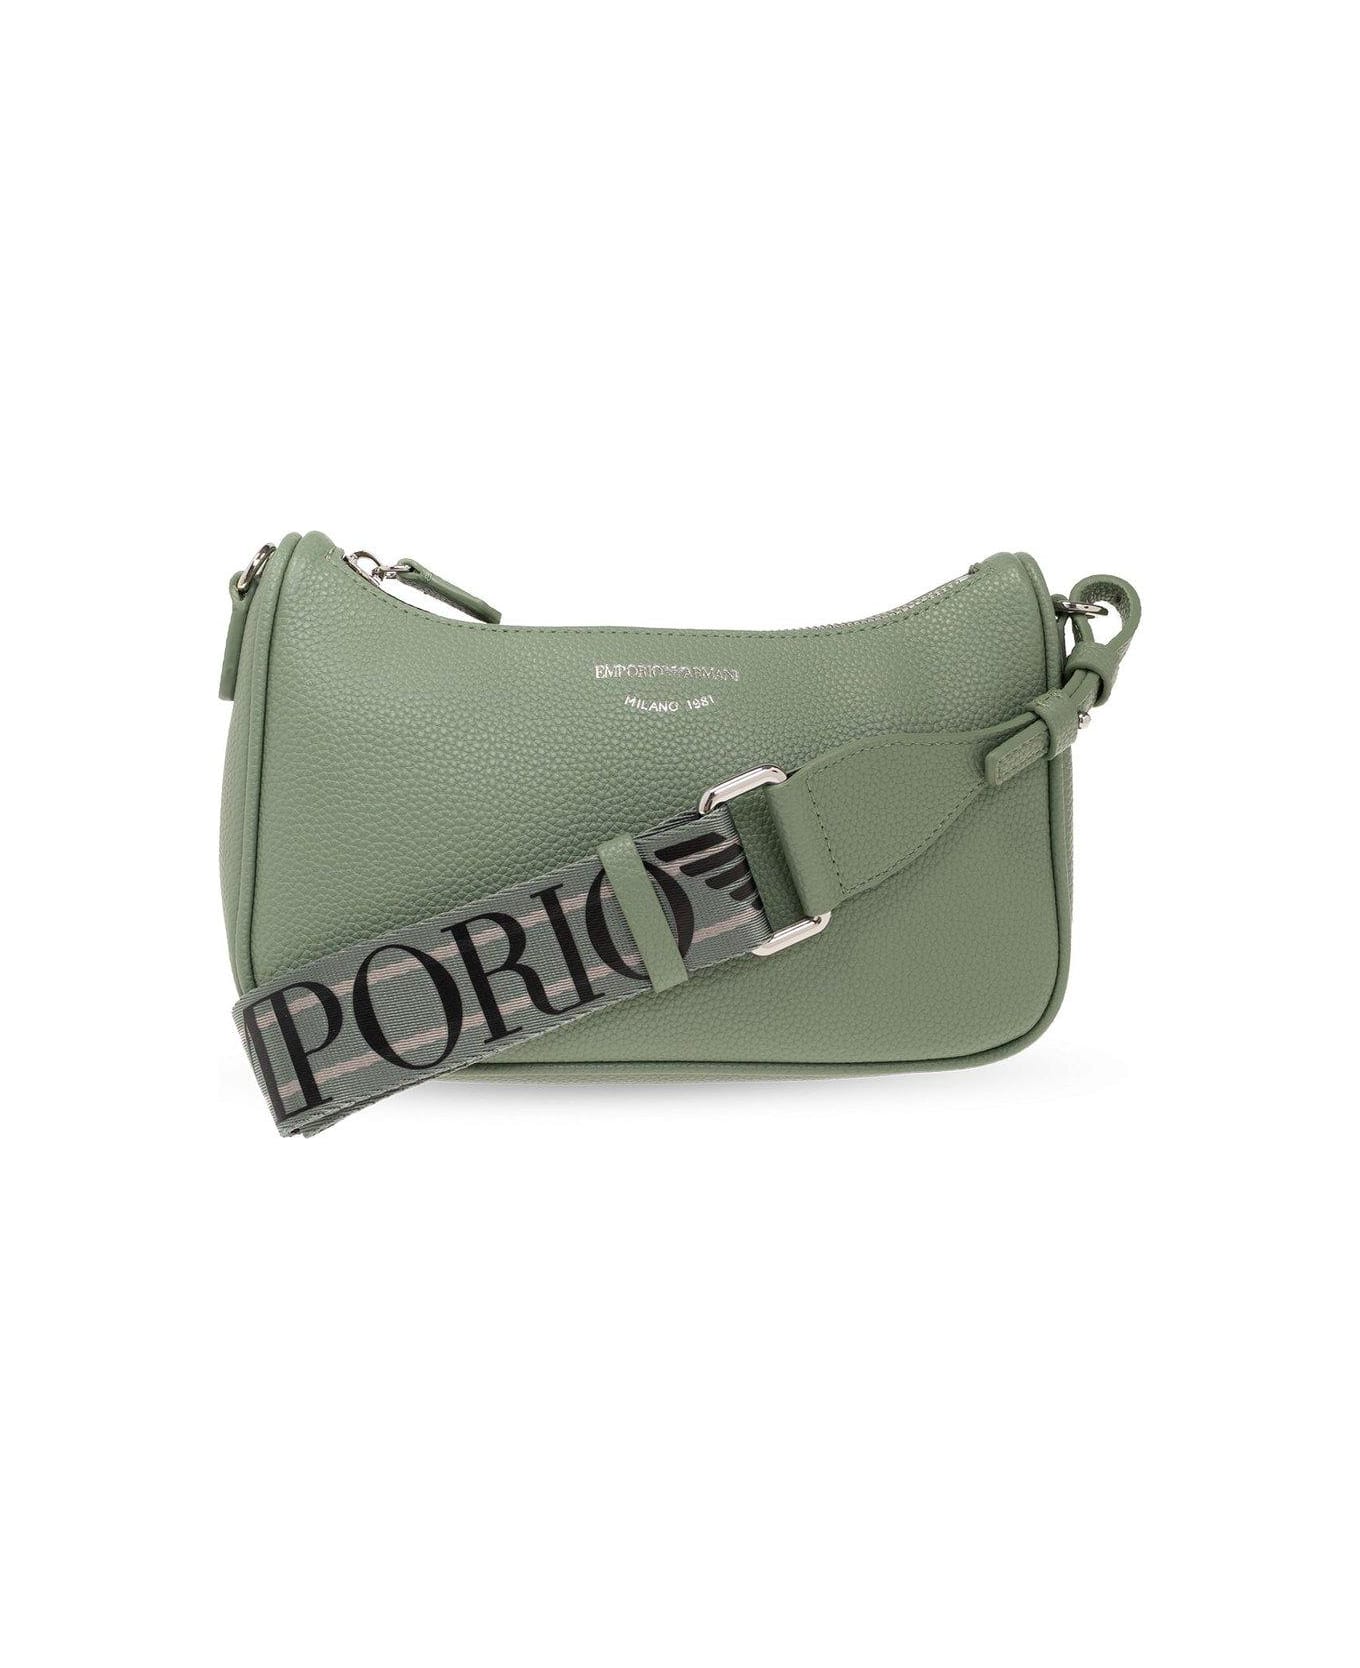 Emporio Armani Shoulder Bag With Logo - Green